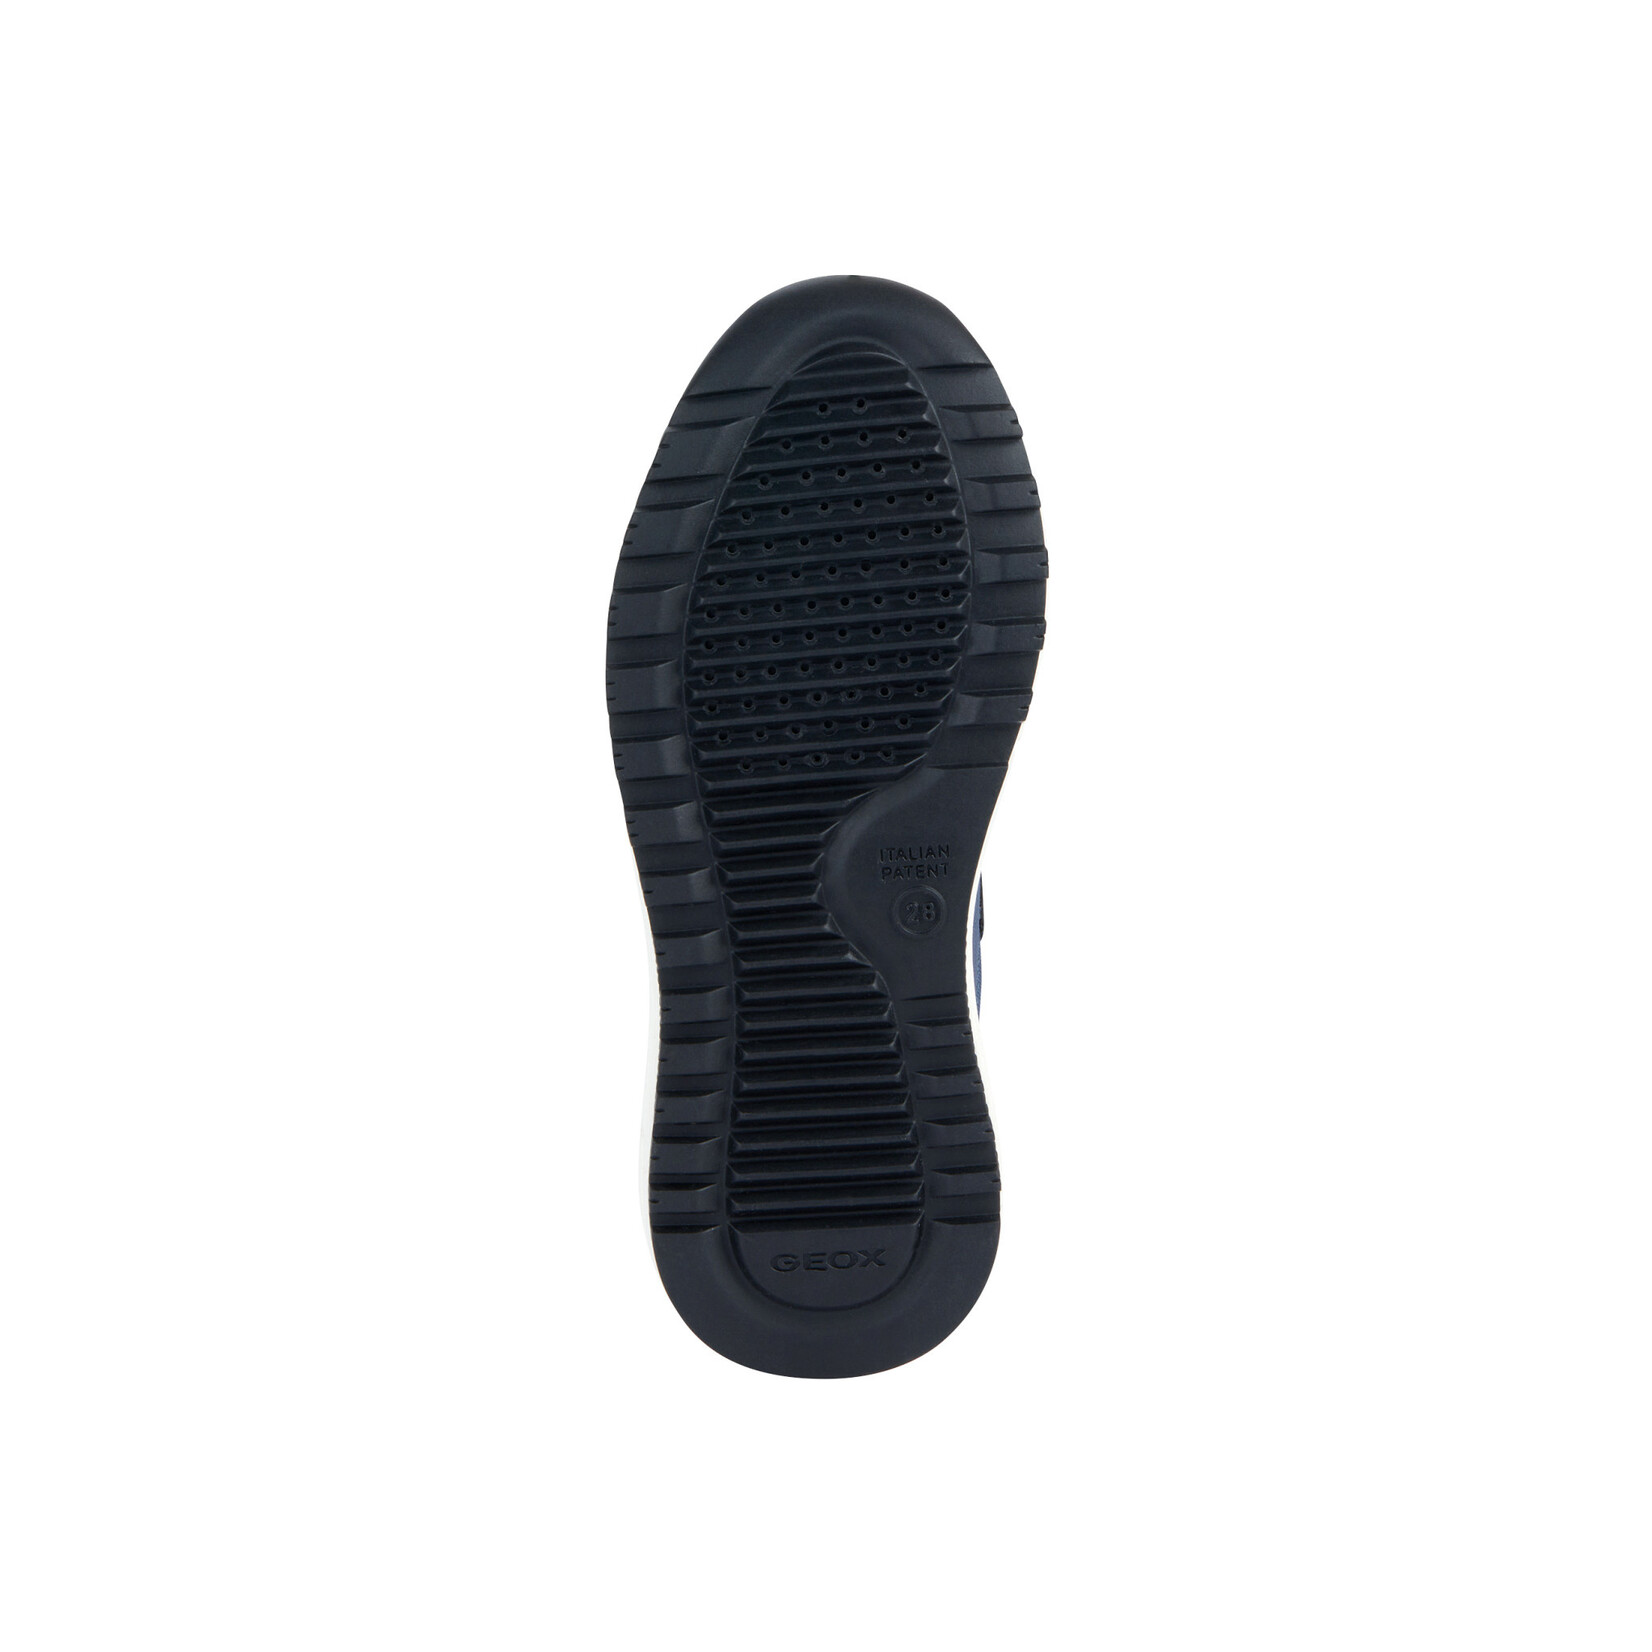 Geox GEOX - Chaussures de sport 'J. ALBEN - Textile+Cuir Synt.' - Avio/Rouge